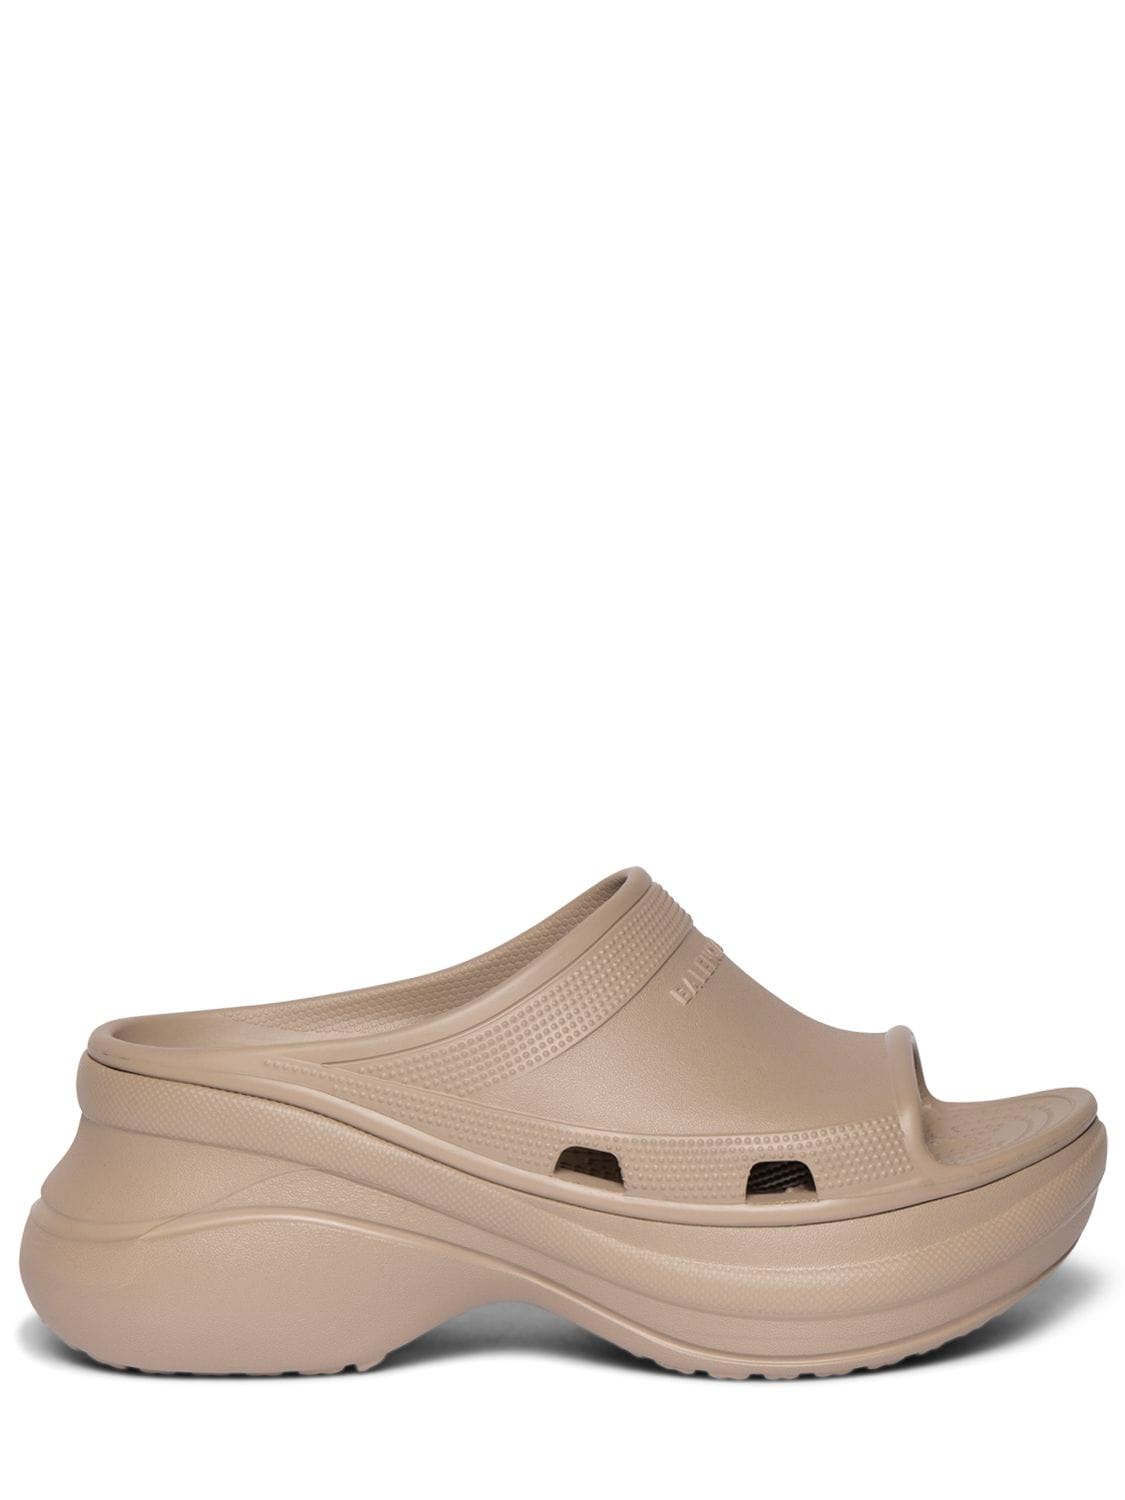 BALENCIAGA 85mm Rubber Pool Slide Sandals